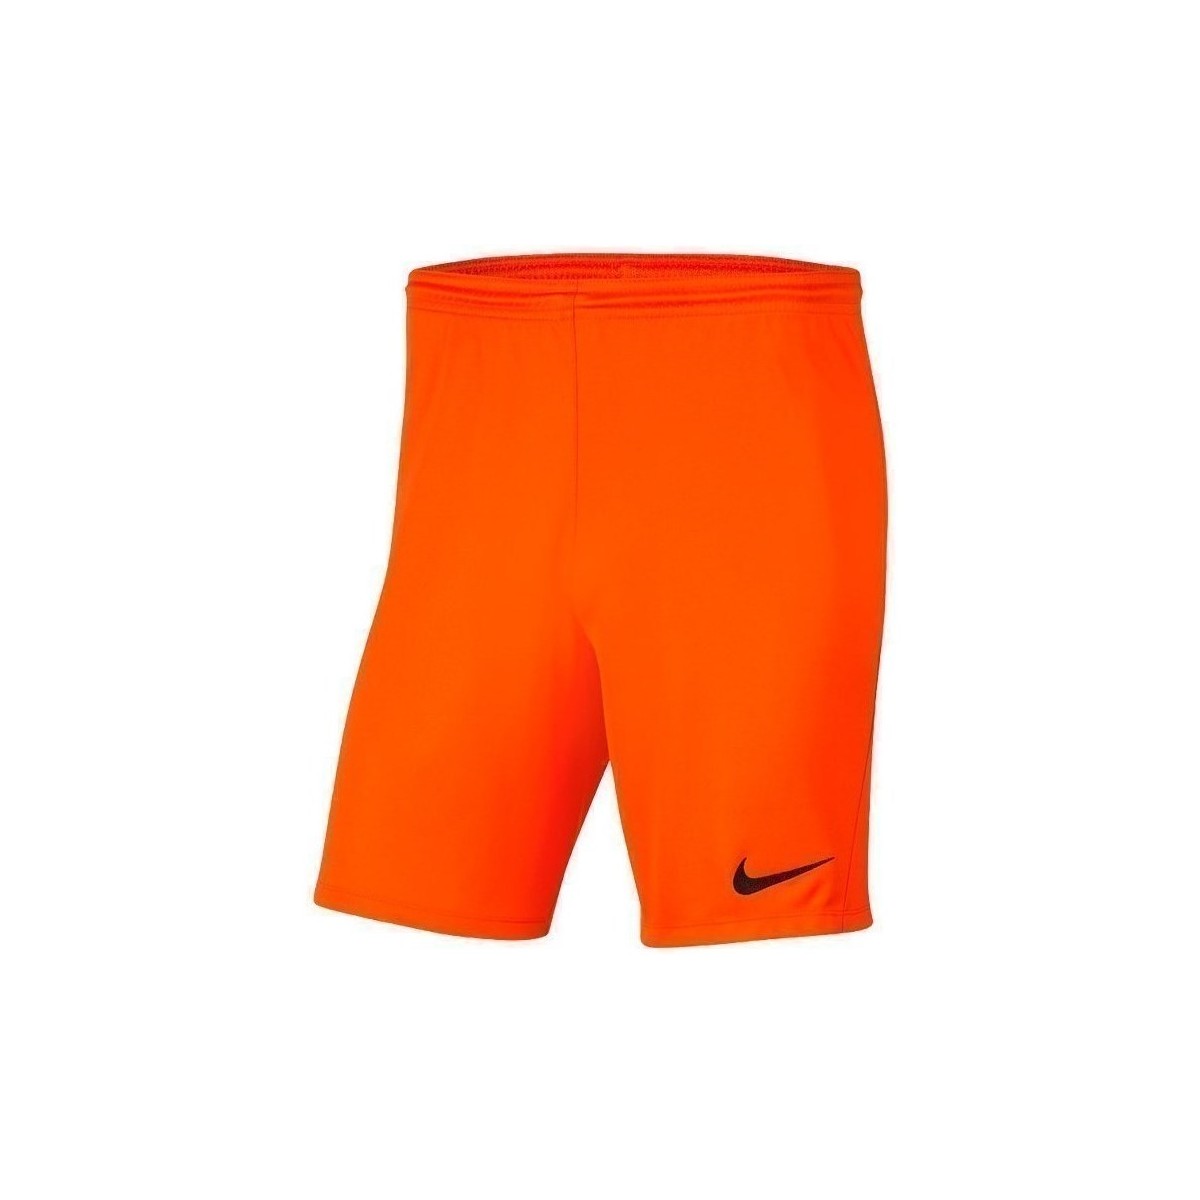 Kleidung Herren 3/4 Hosen & 7/8 Hosen Nike Dry Park Iii Orange